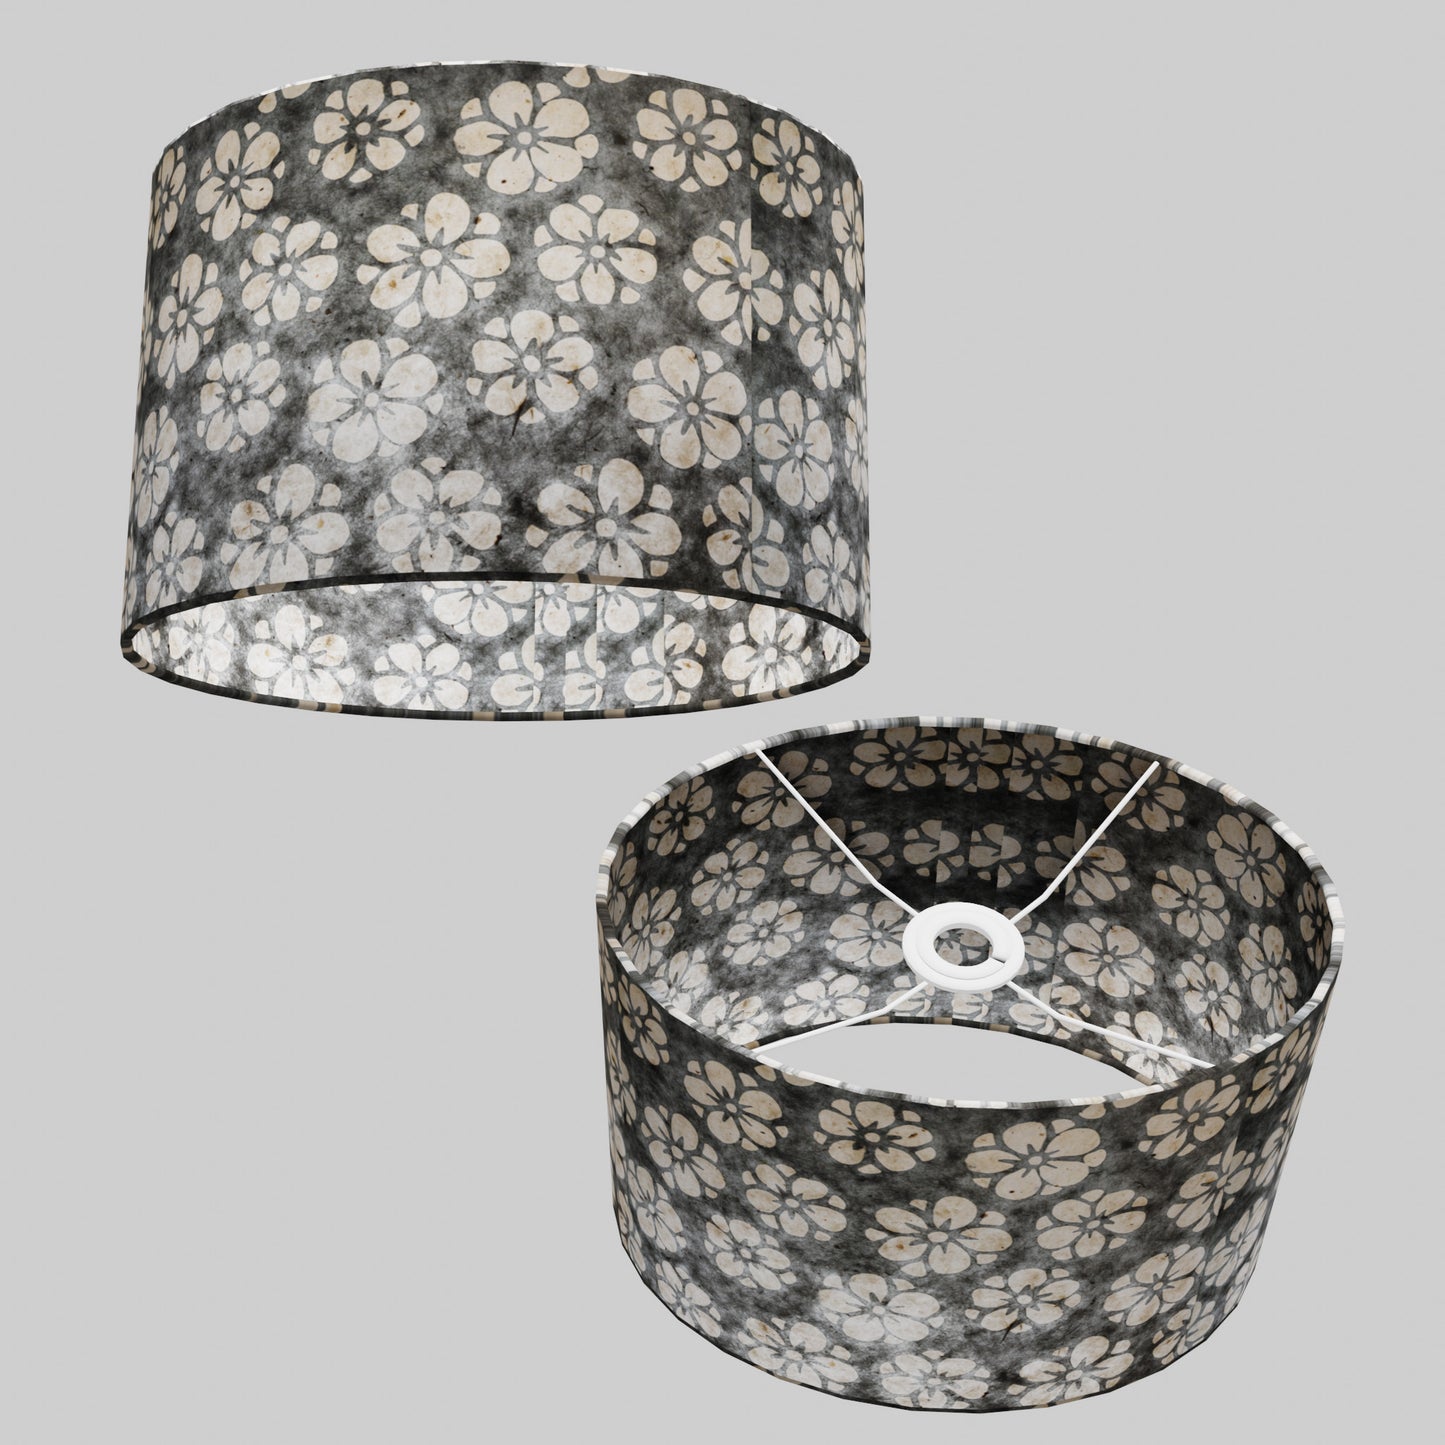 Oval Lamp Shade - P77 - Batik Star Flower Grey, 30cm(w) x 20cm(h) x 22cm(d)